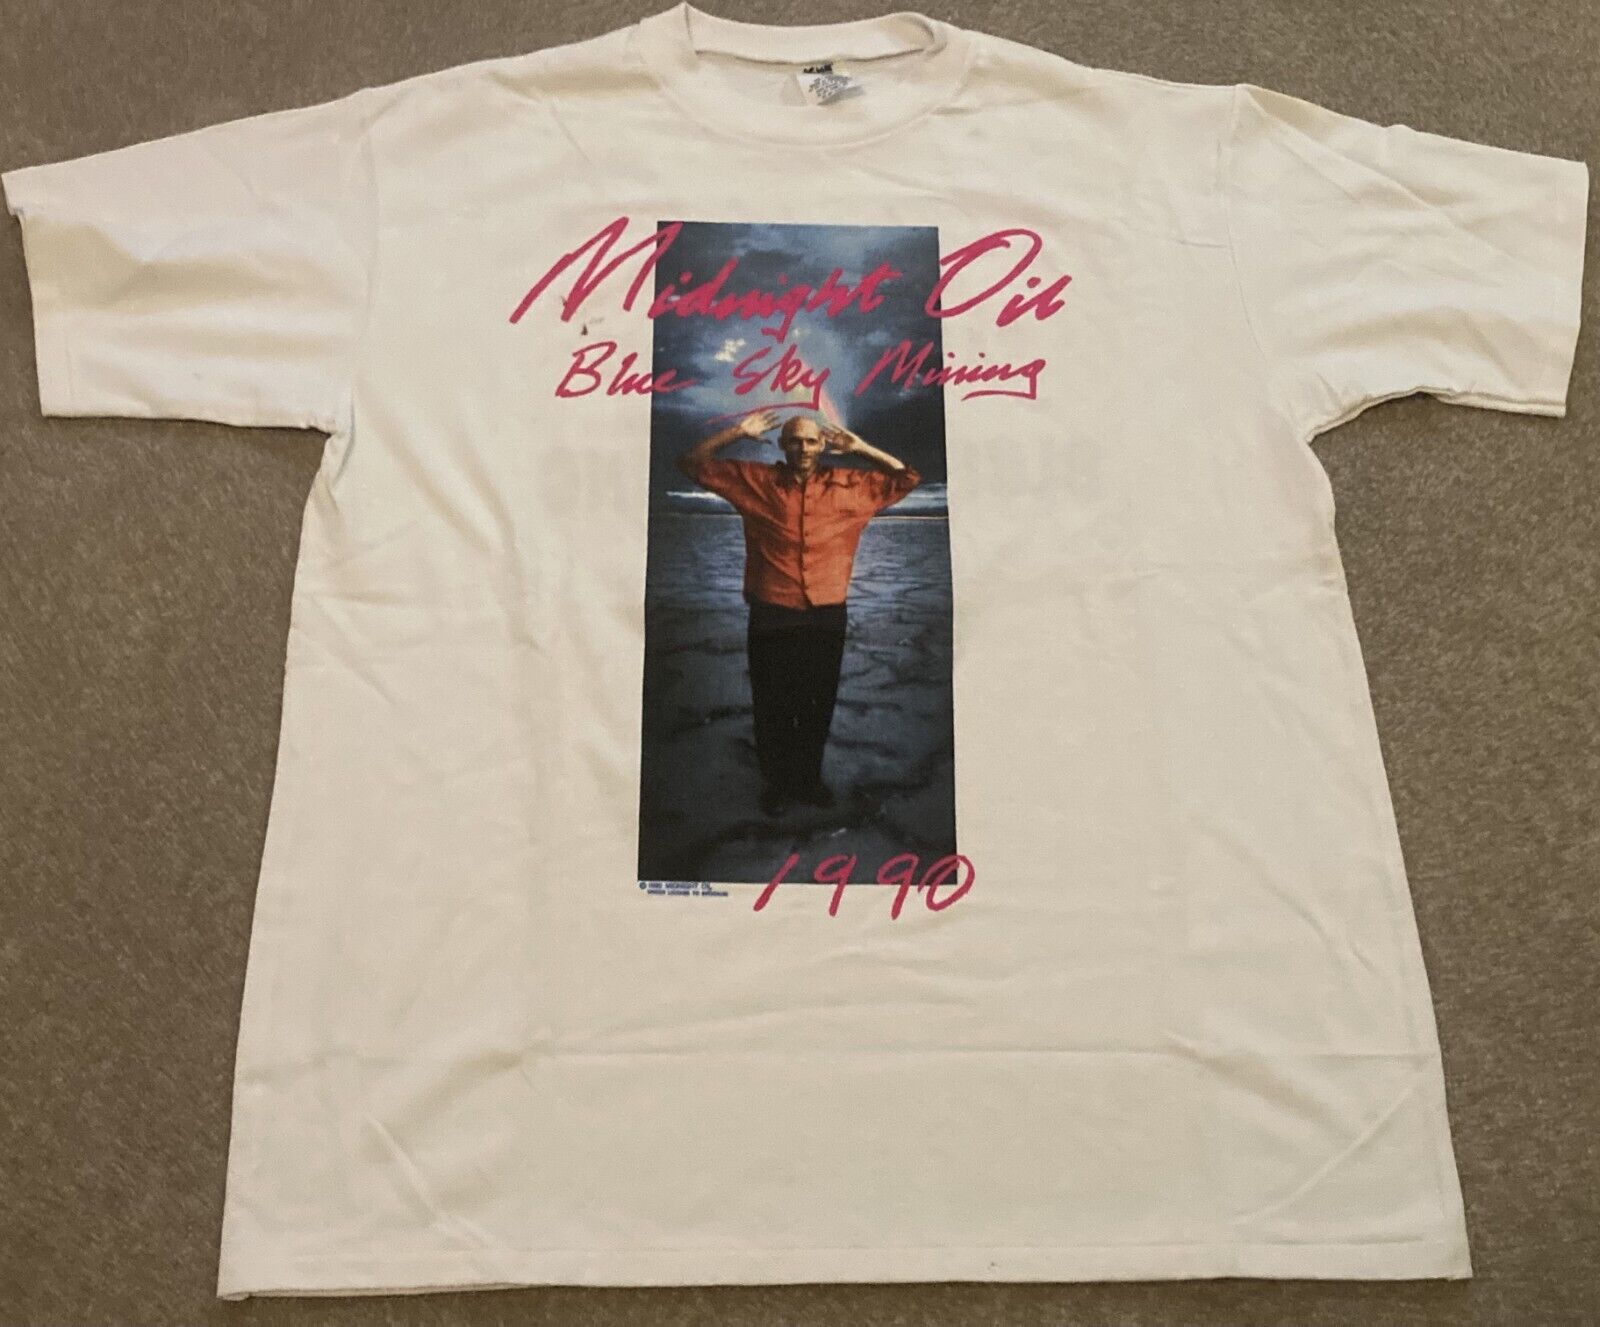 MIDNIGHT OIL-Blue Sky Mining  RARE ORIGINAL VINTAGE  LARGE  T-Shirt (1990)